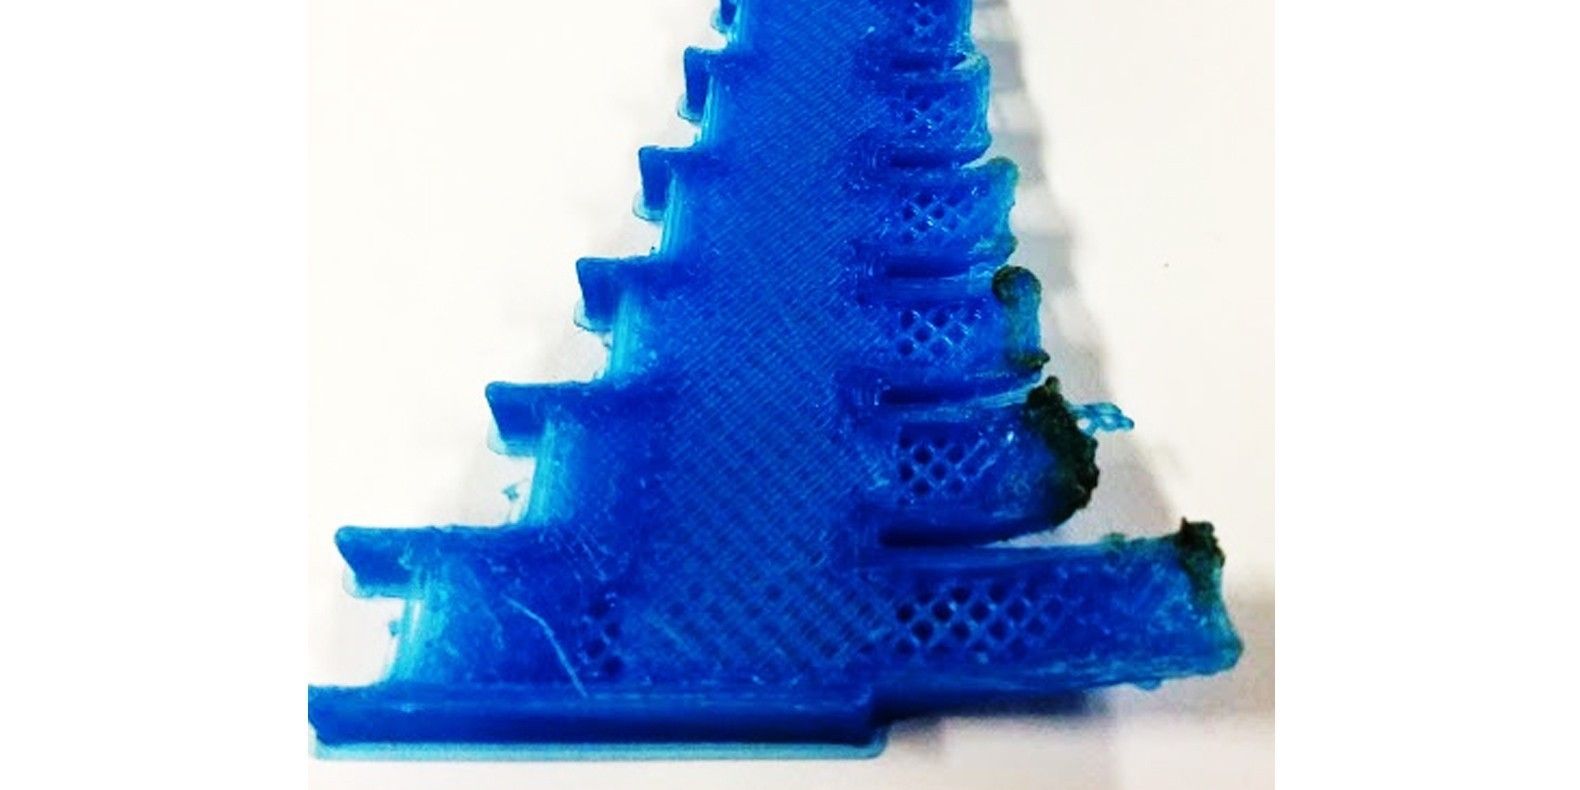 cintrage 3D printing